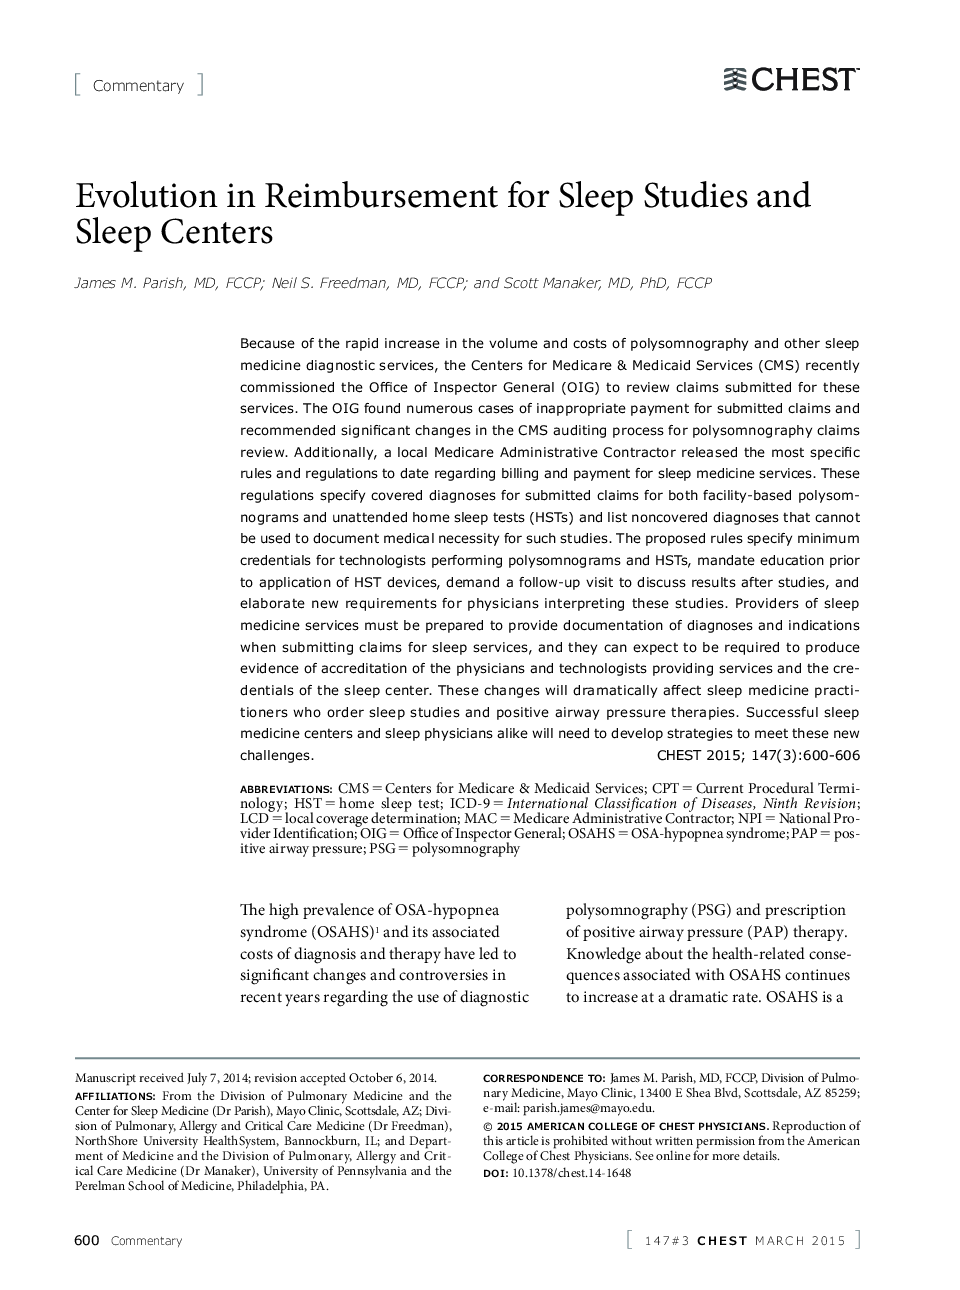 Evolution in Reimbursement for Sleep Studies and Sleep Centers 